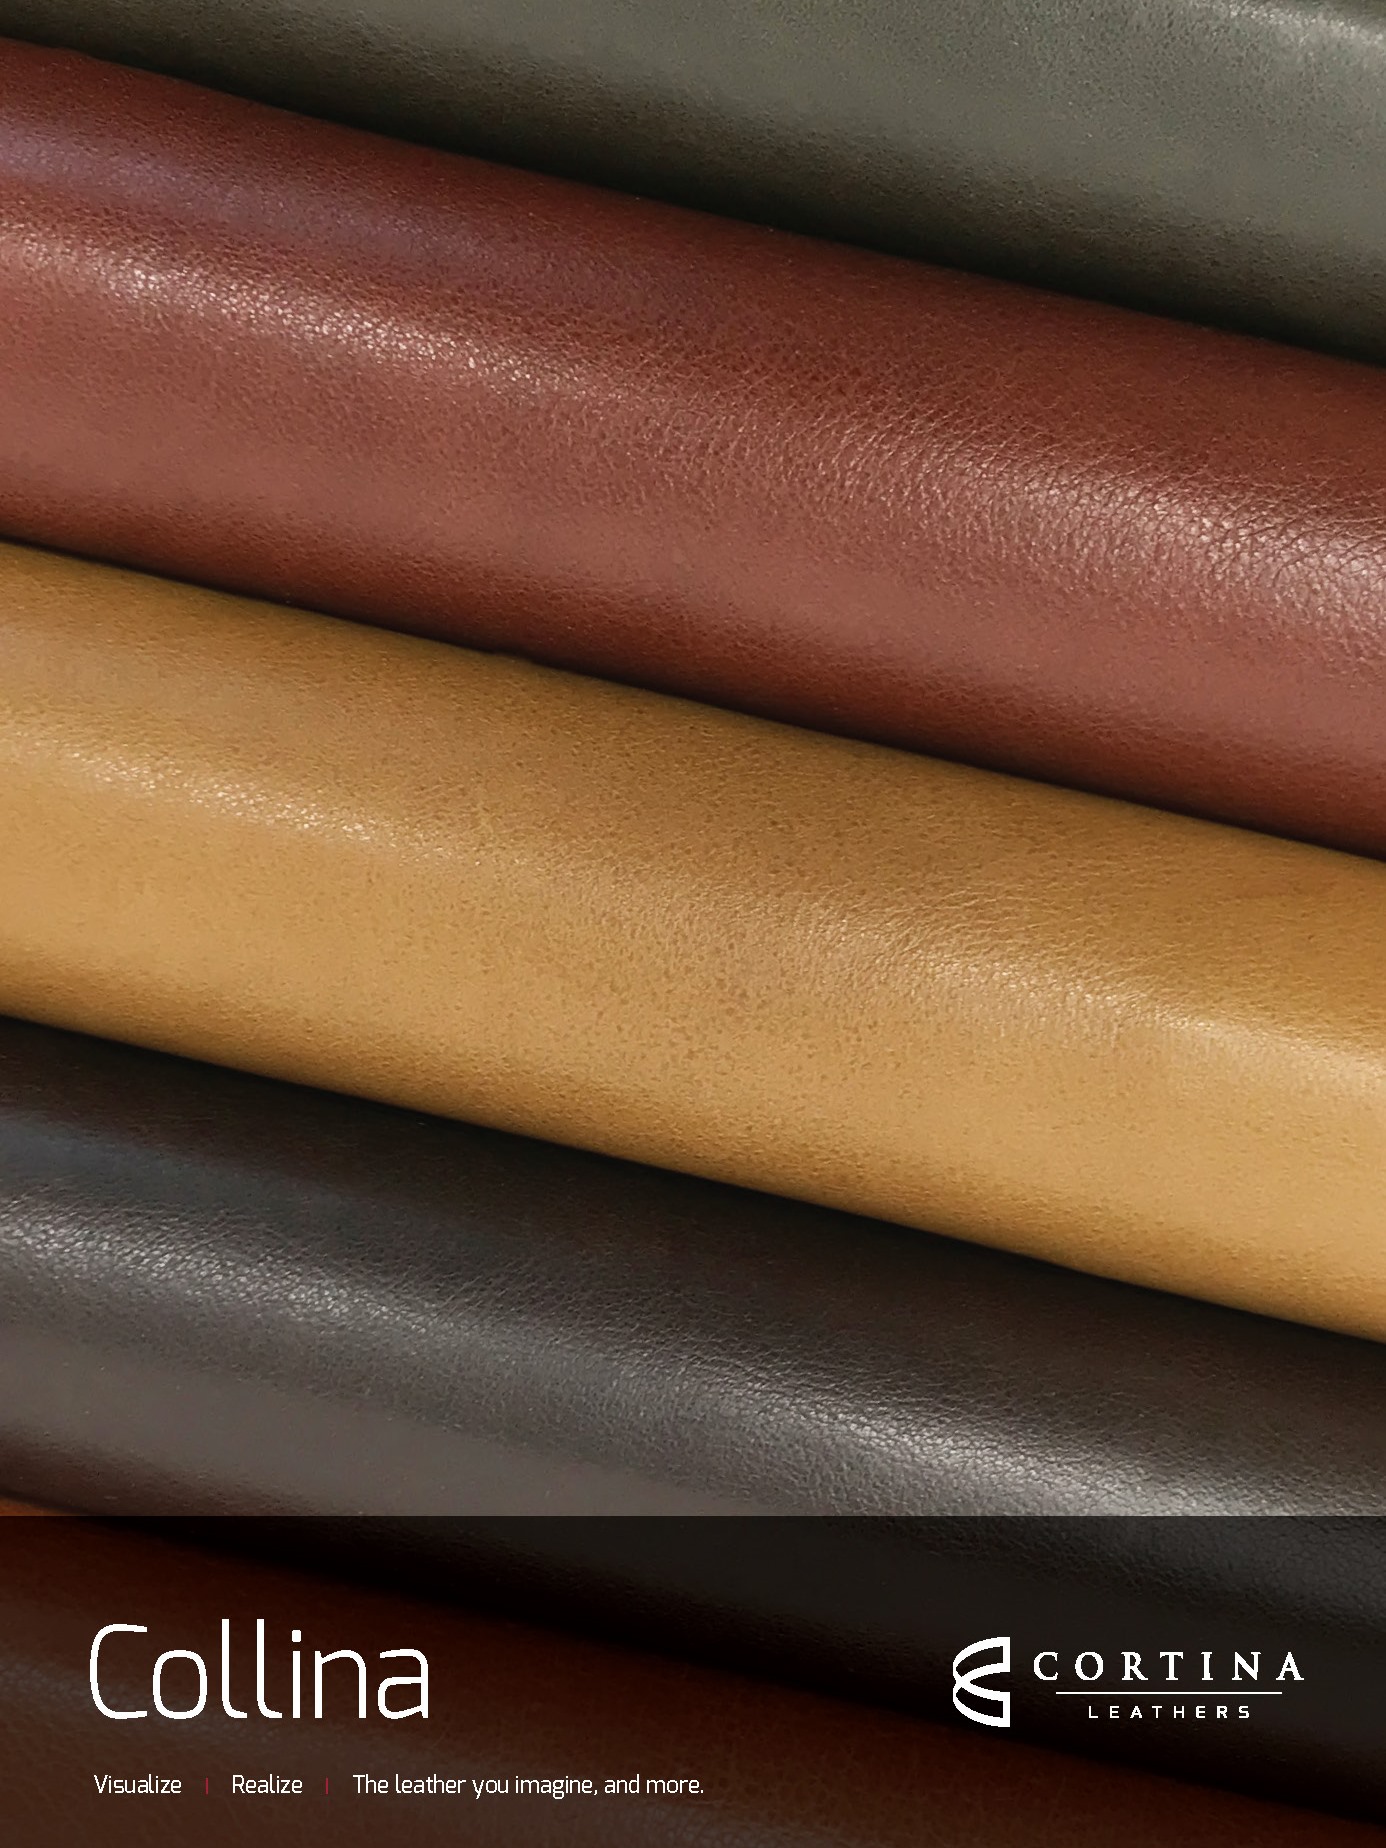 Collina Leather